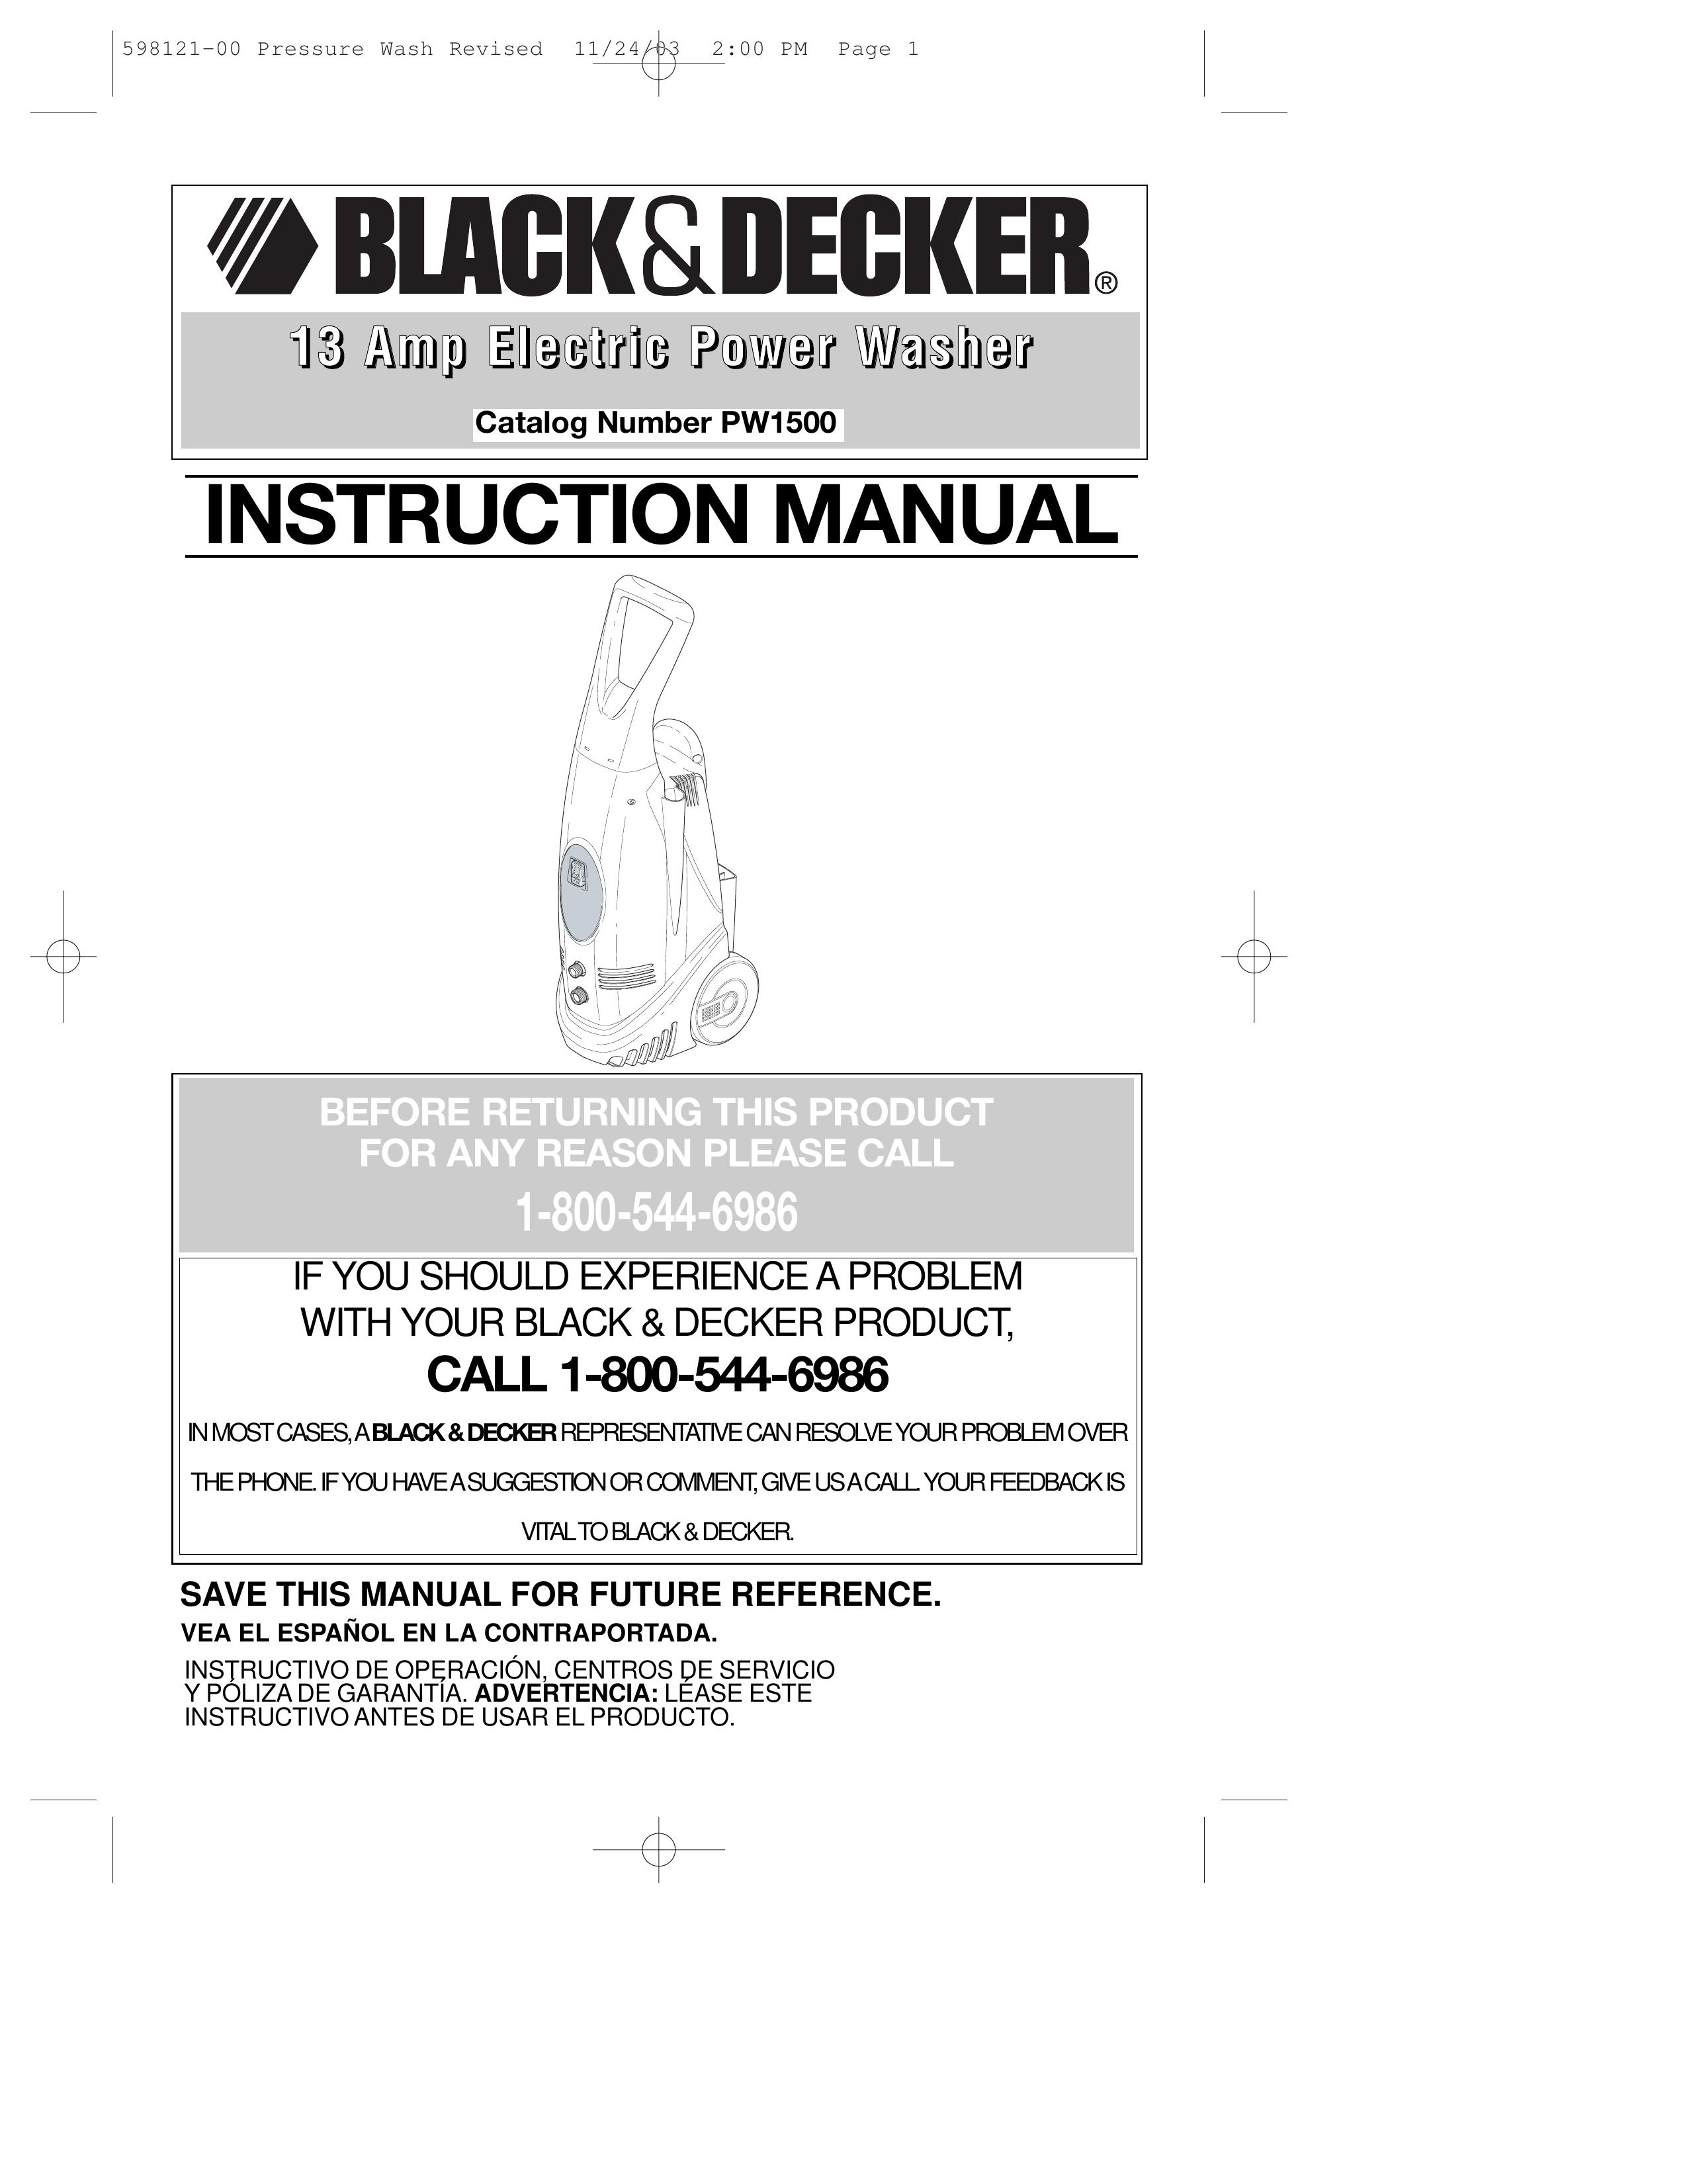 Black & Decker PW1500 Pressure Washer User Manual